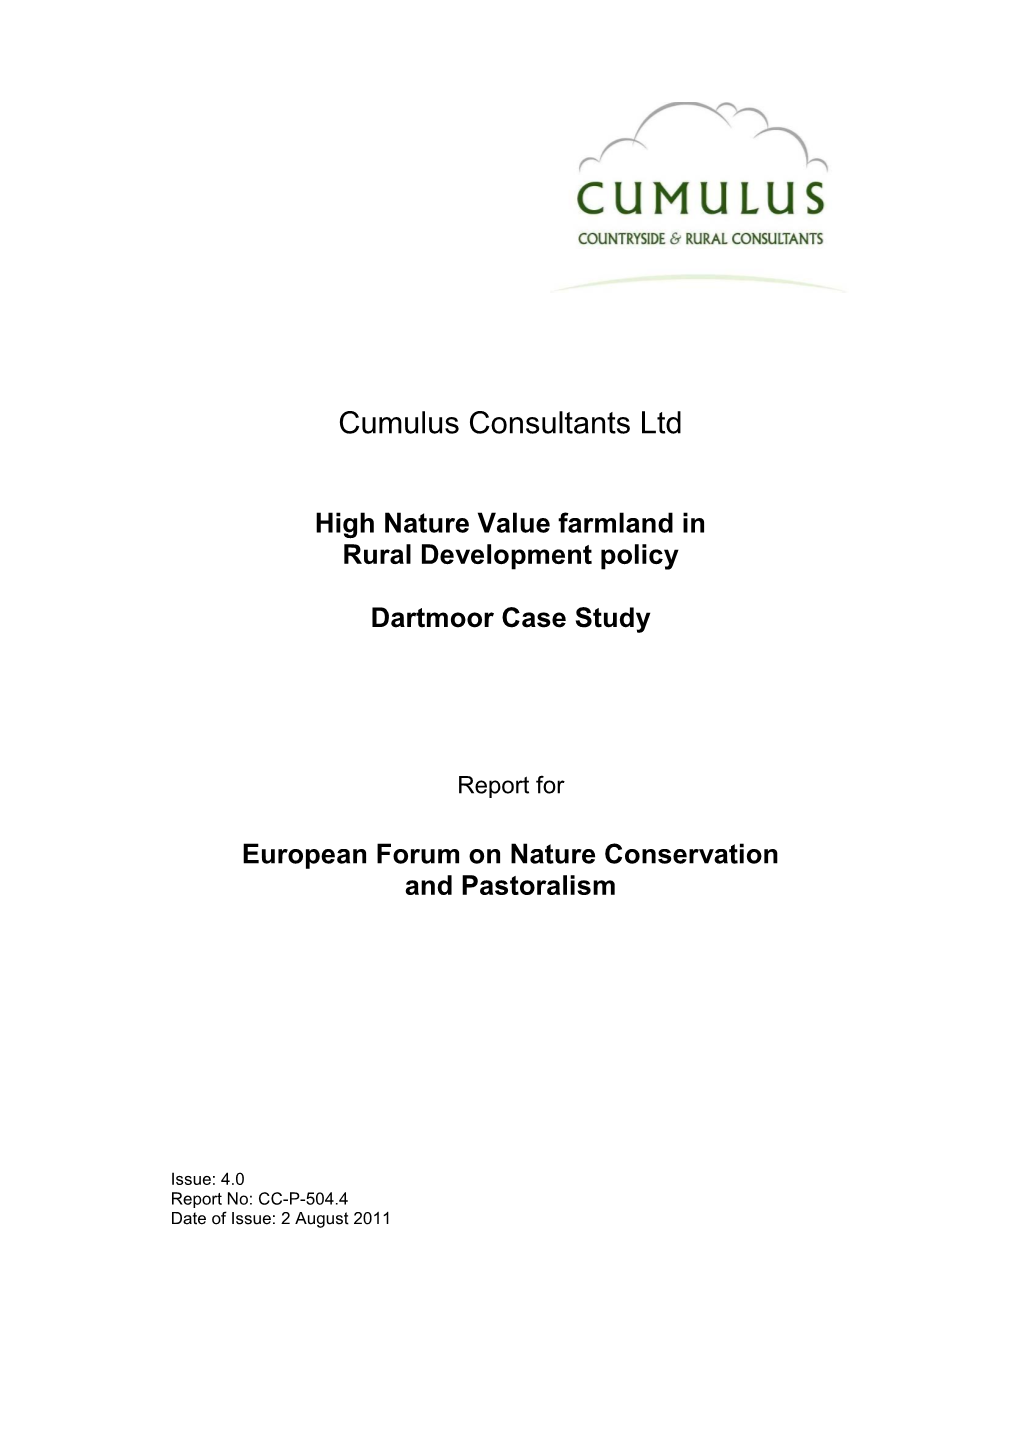 High Nature Value Farmland in Rural Development Policy Dartmoor Case